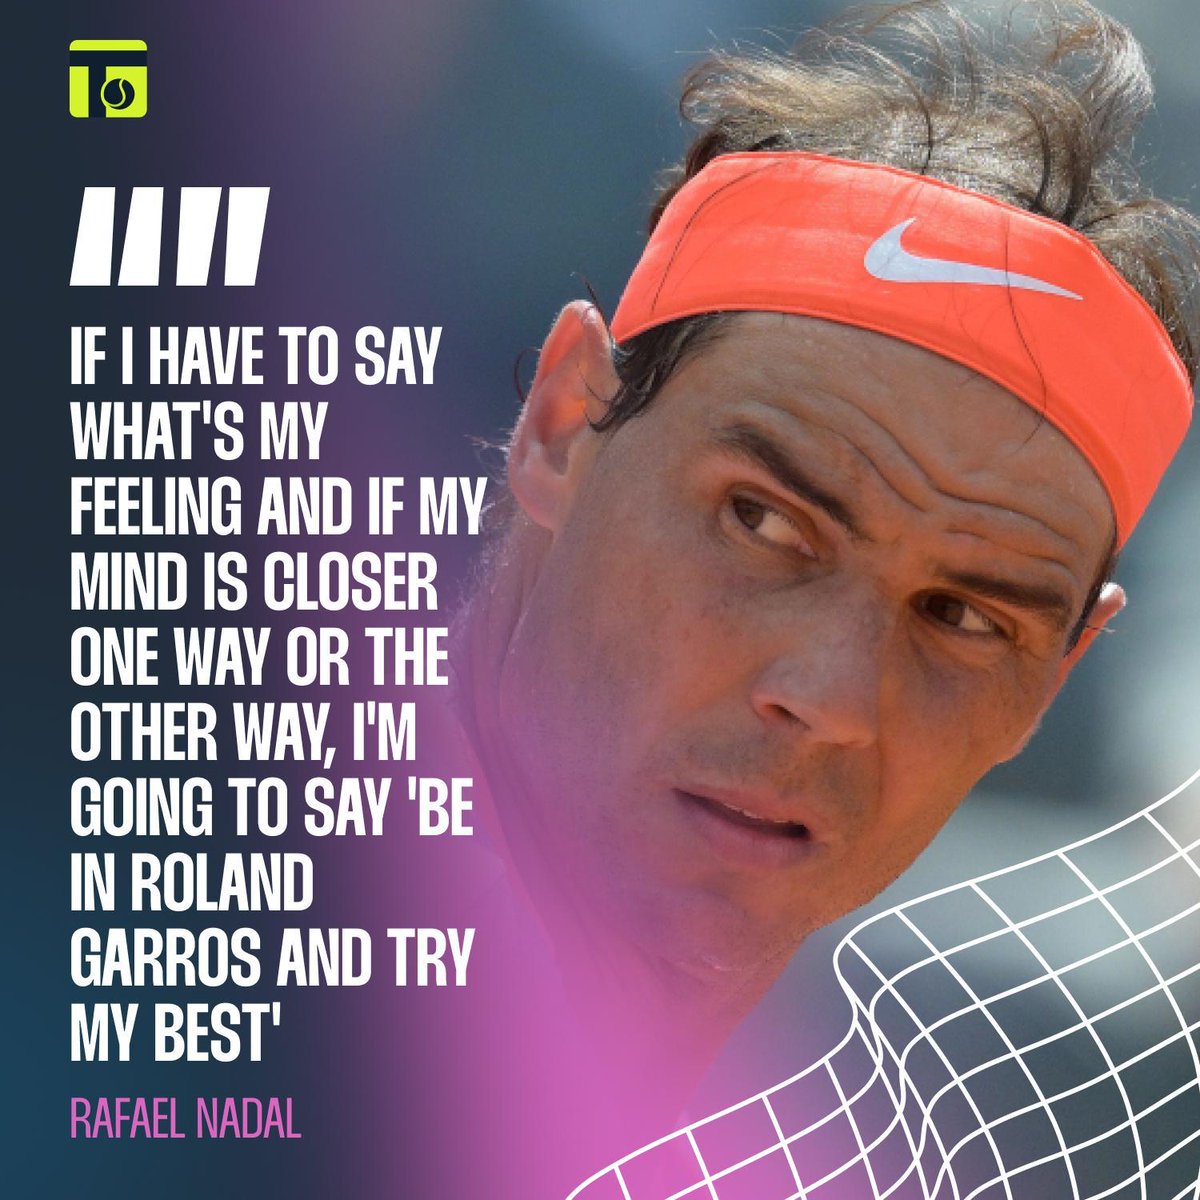 Rafael Nadal hints he will play at Roland Garros 🥳

#Tennis #RafaelNadal #FrenchOpen #RolandGarros